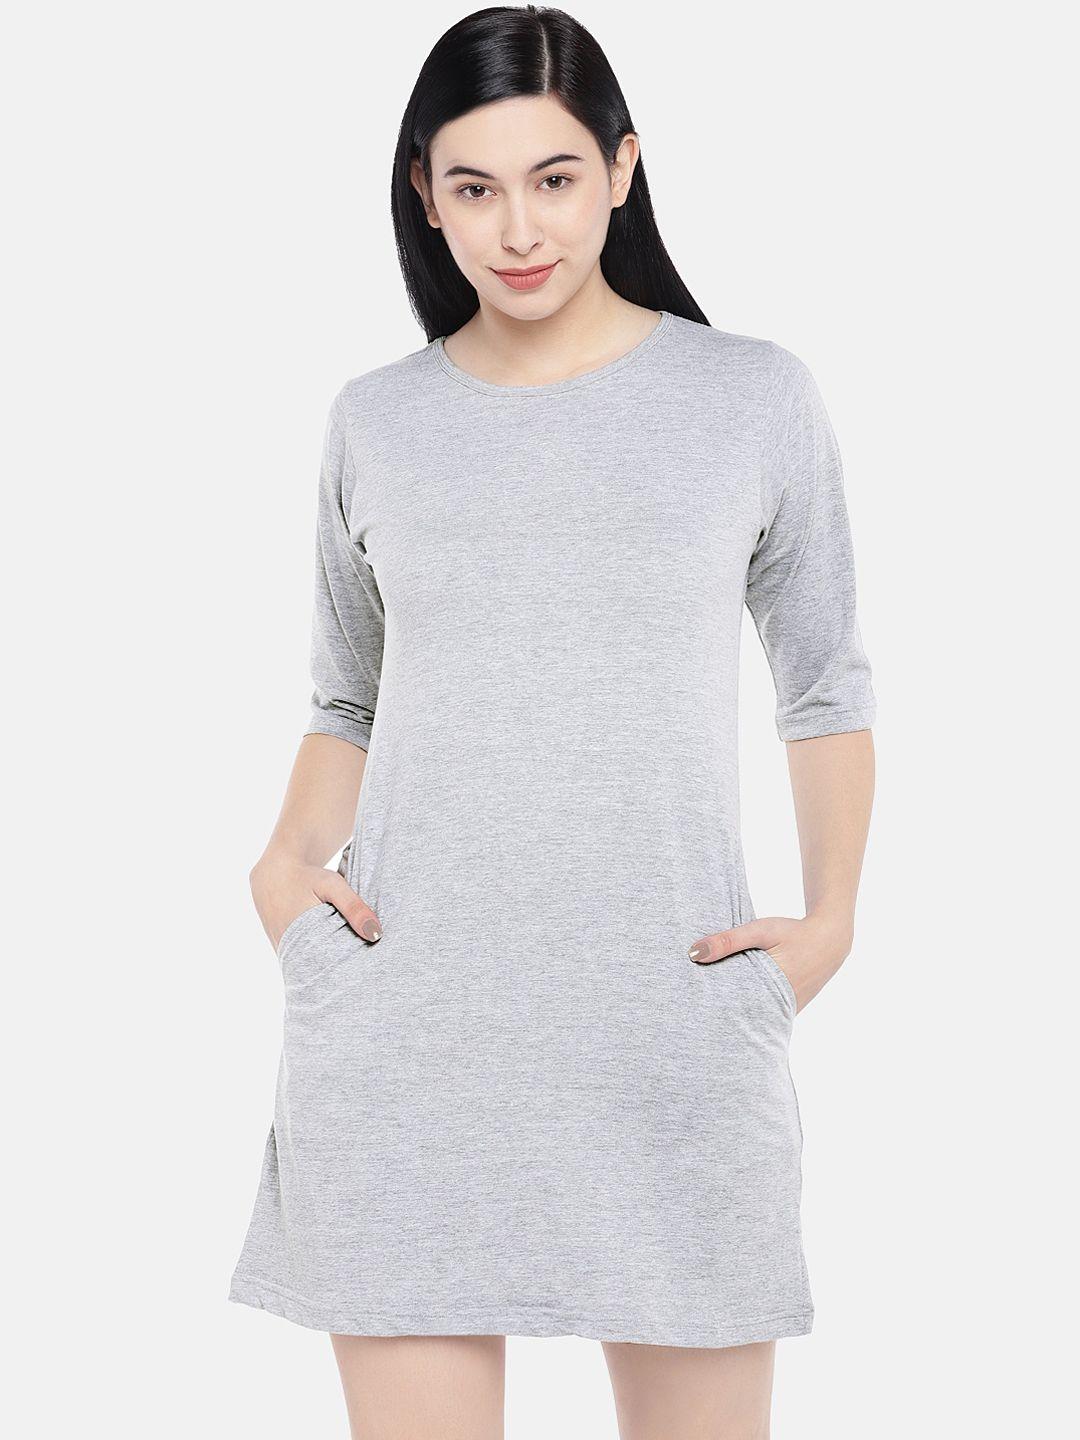 status mantra grey t-shirt solid dress